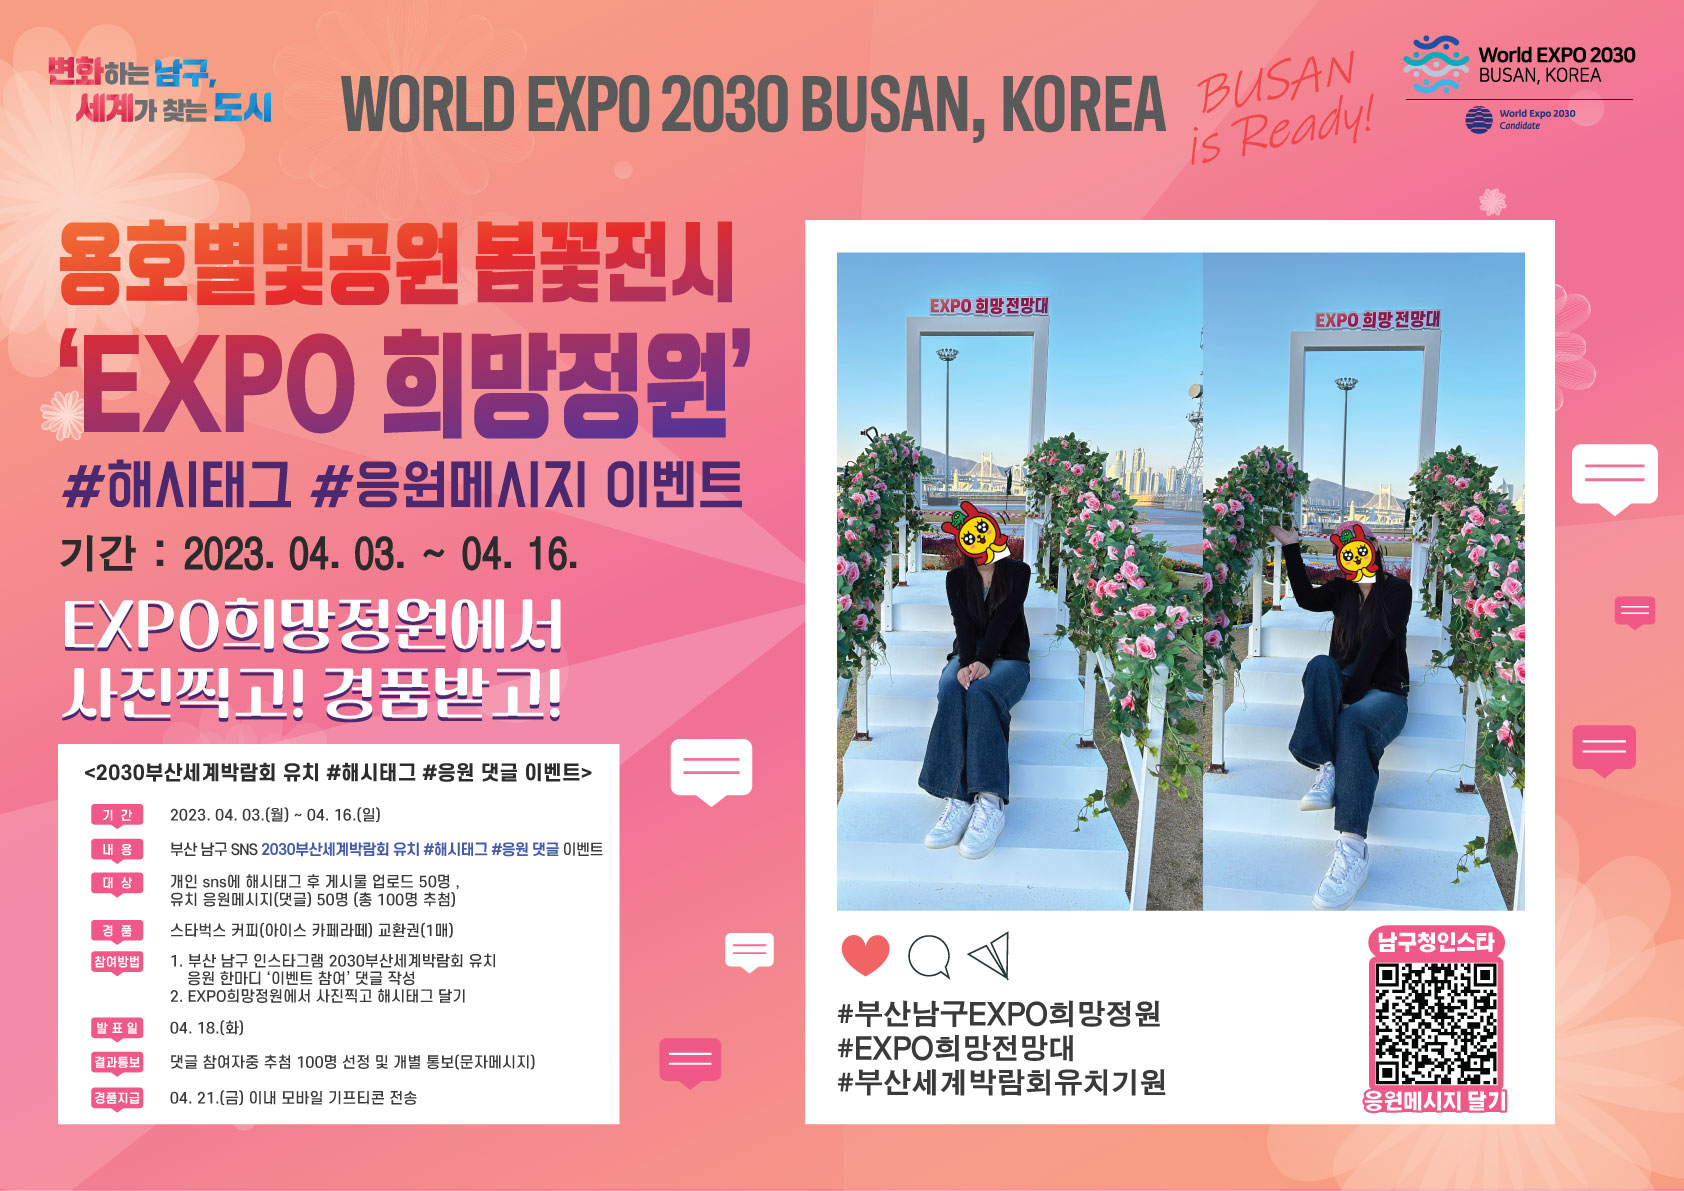 EXPO 희망정원 SNS(부산세계박람회 응원메시지, 해시태그) 이벤트 실시0